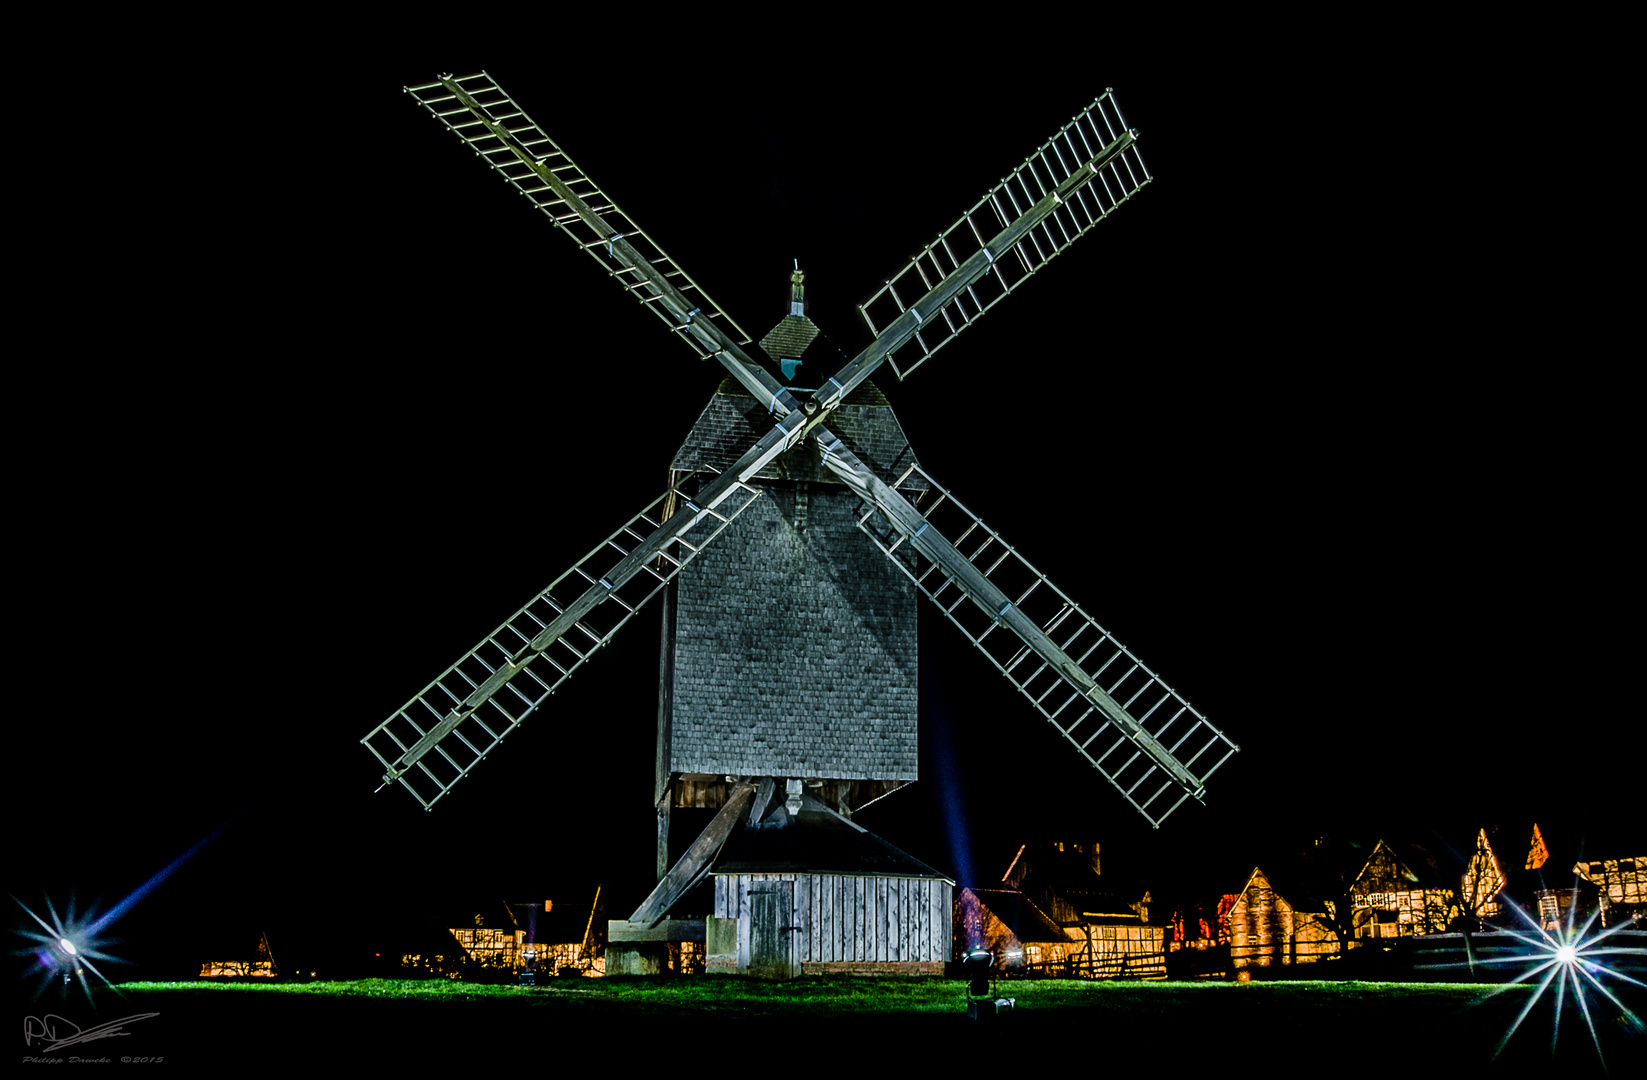 Windmühle beim Museumsadvent 2015